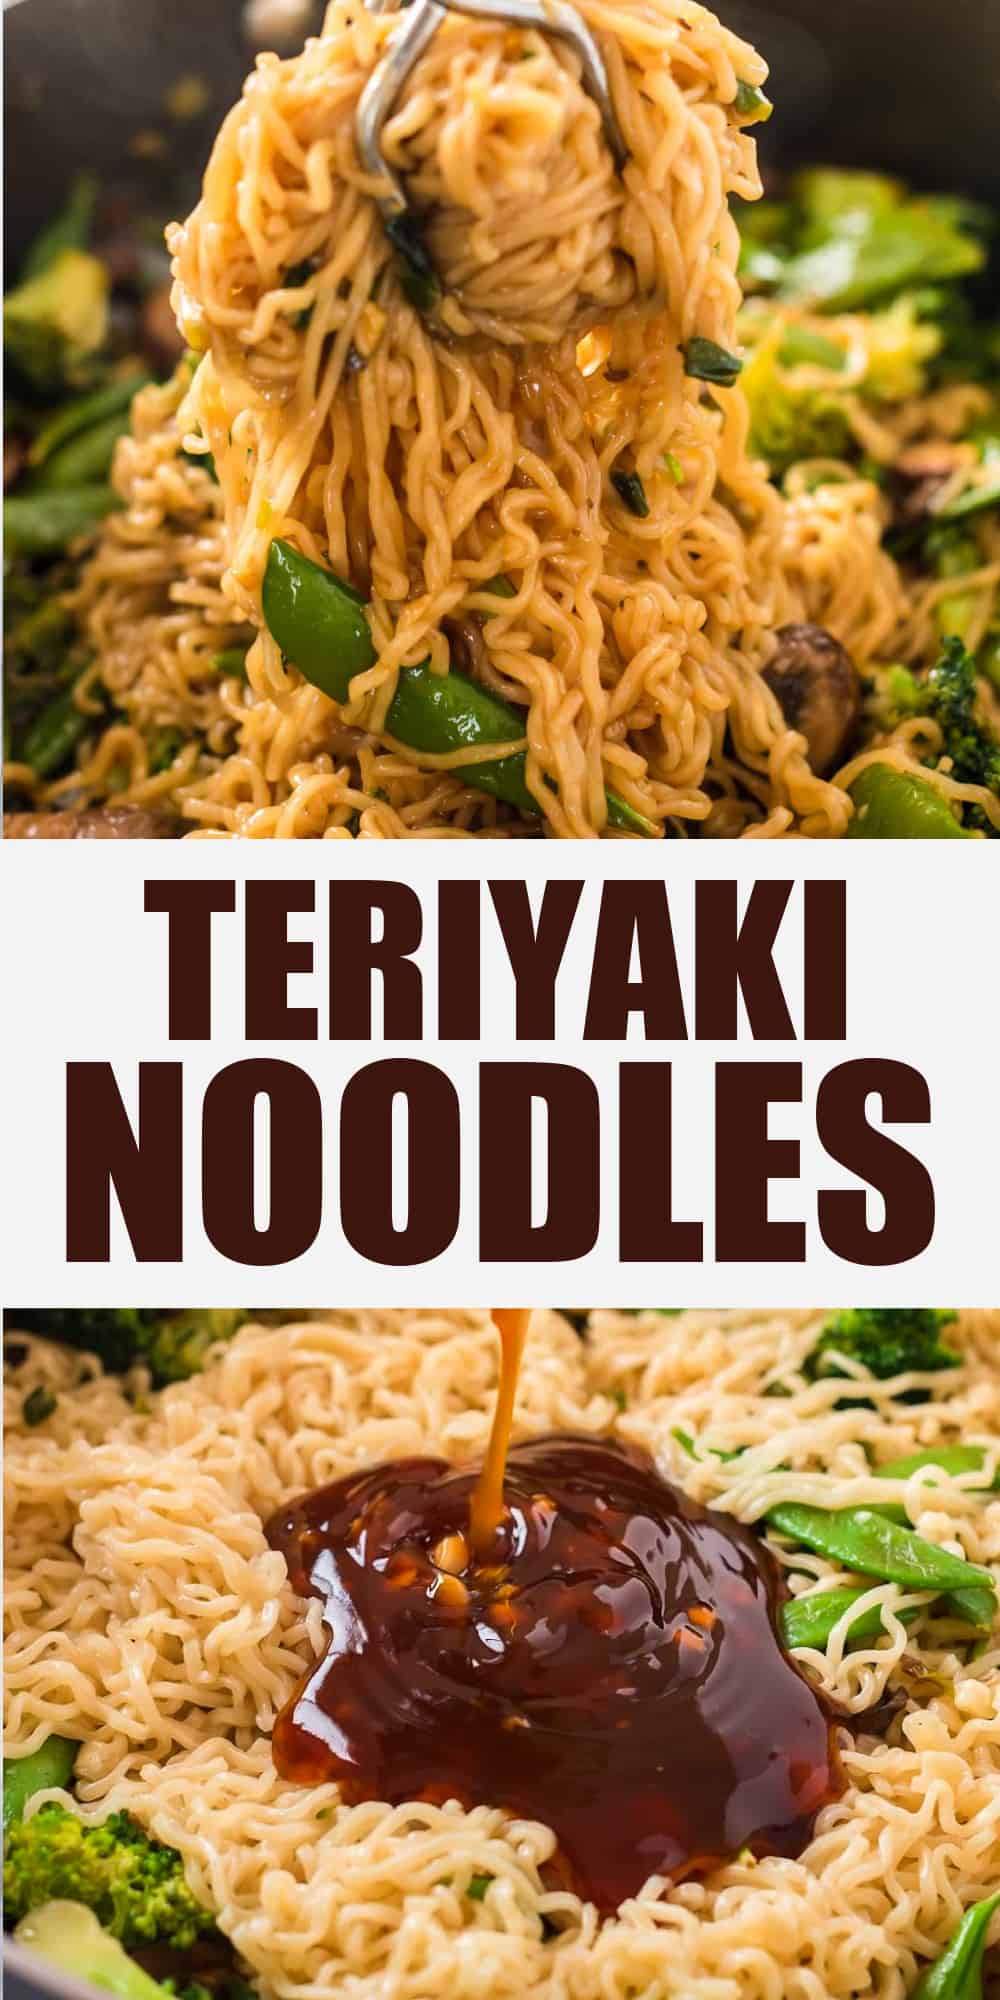 image with text "teriyaki noodles"